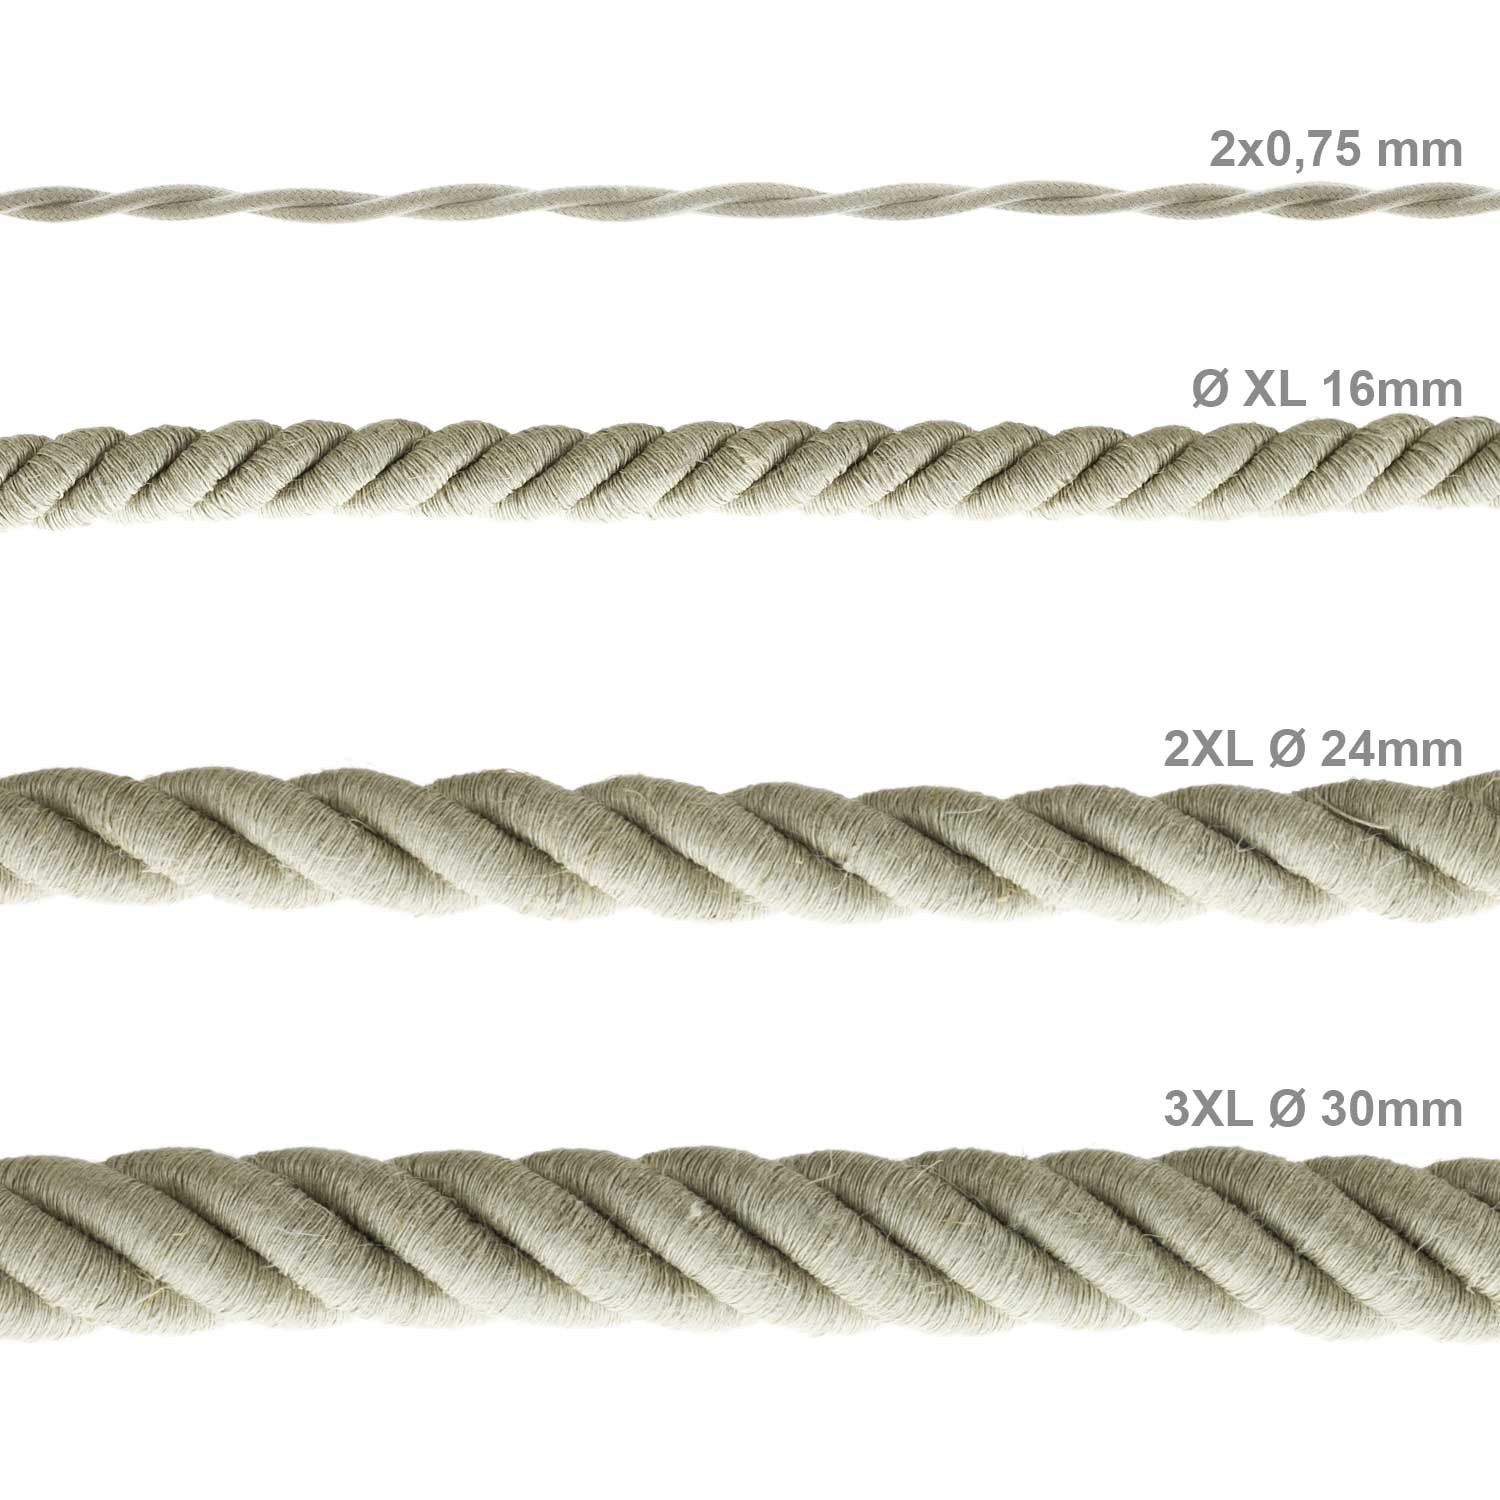 Cordón 2XL, cable eléctrico 3x0,75, recubierto en lino natural. Diámetro: 24mm.